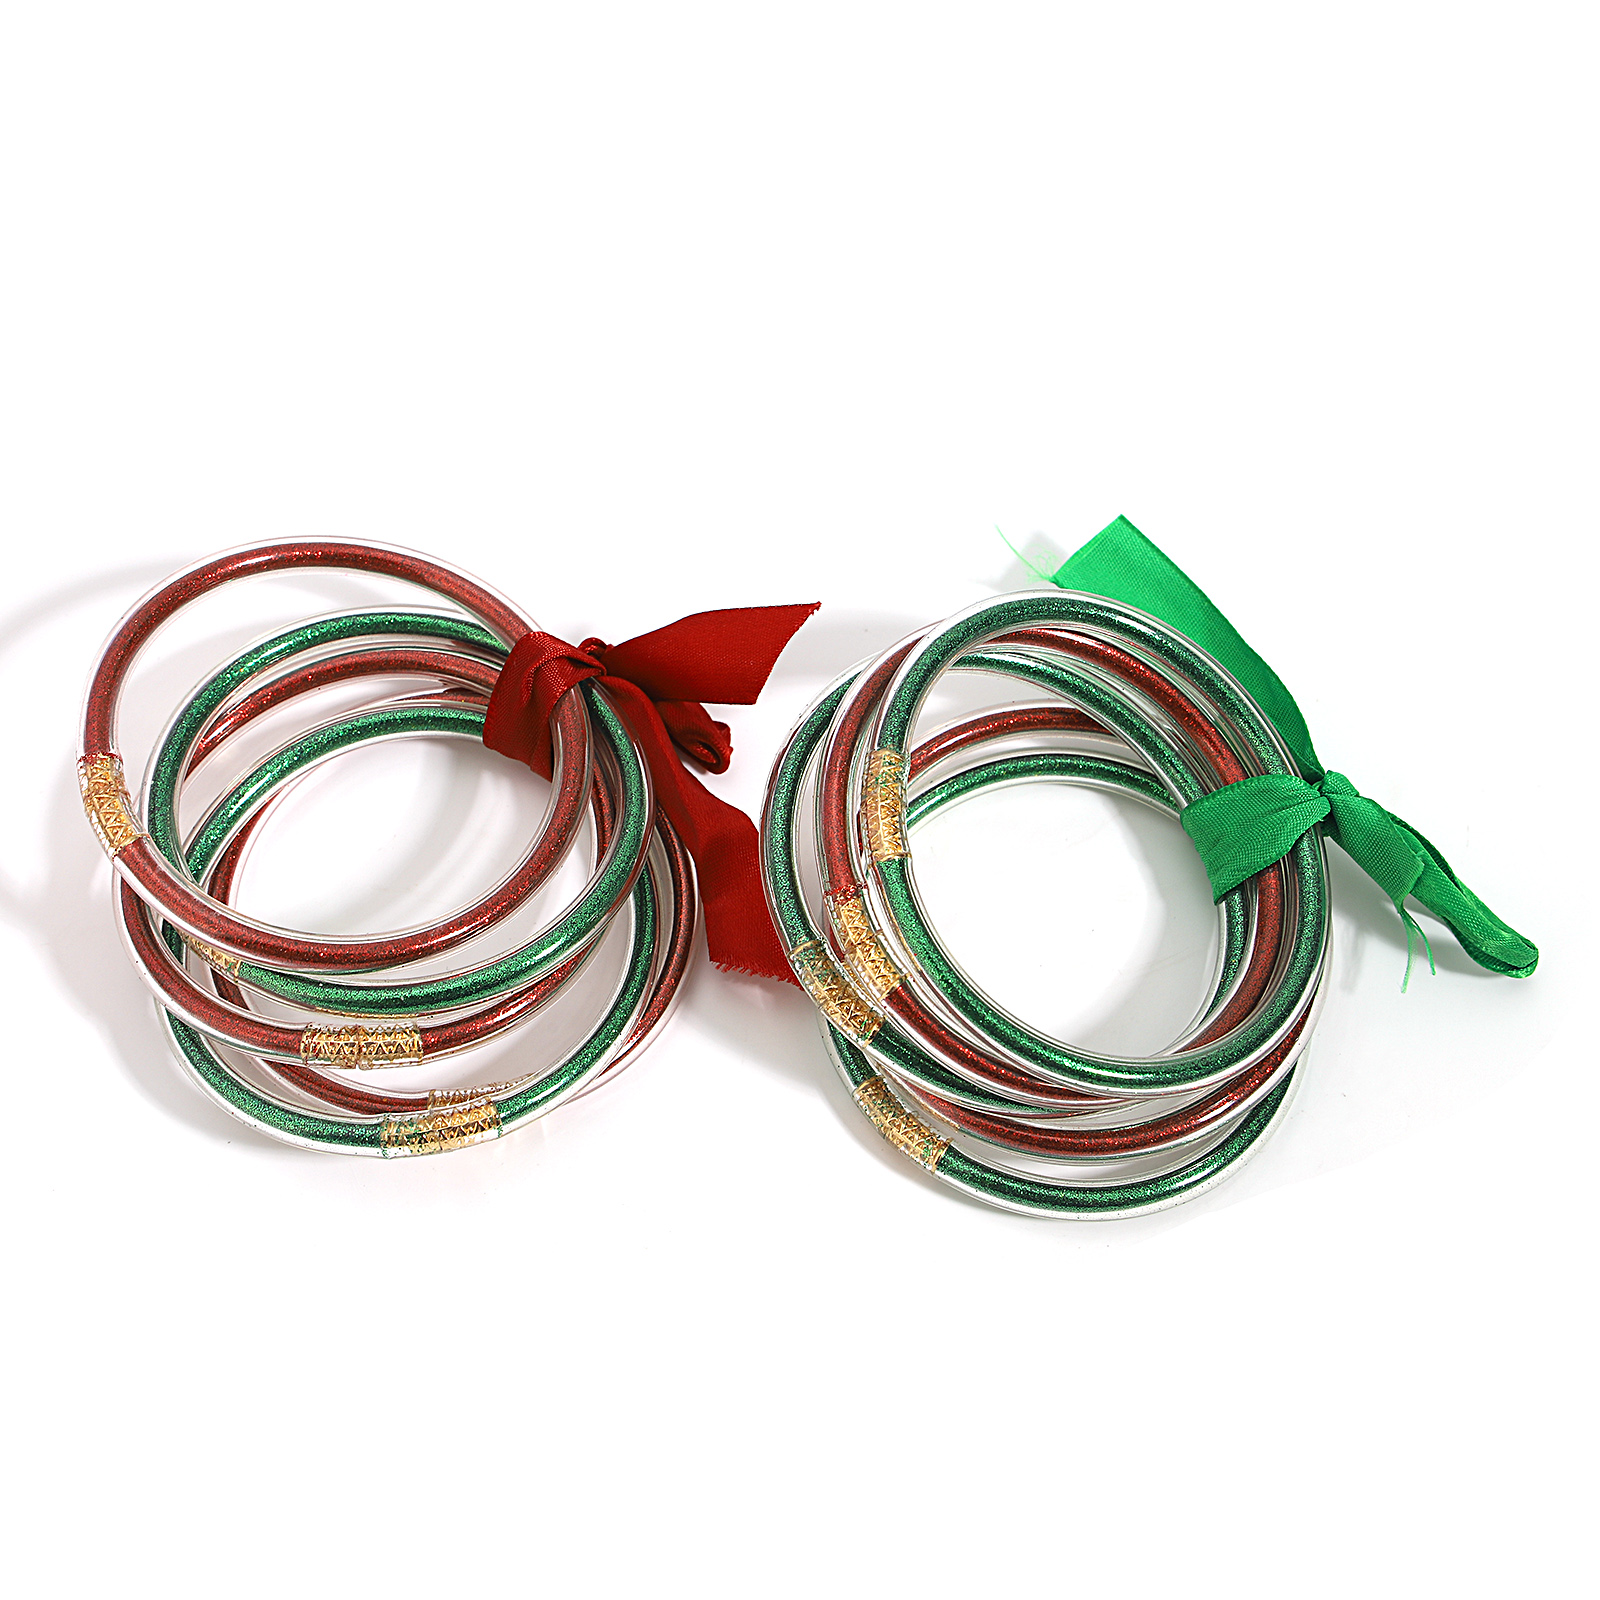 AENSOA handmade 5pcs/set Christmas Glitter Jelly Bangle Bracelet for Women Men Red Green Shiny Silicone Bangles Set Xmas Jewelry Gift